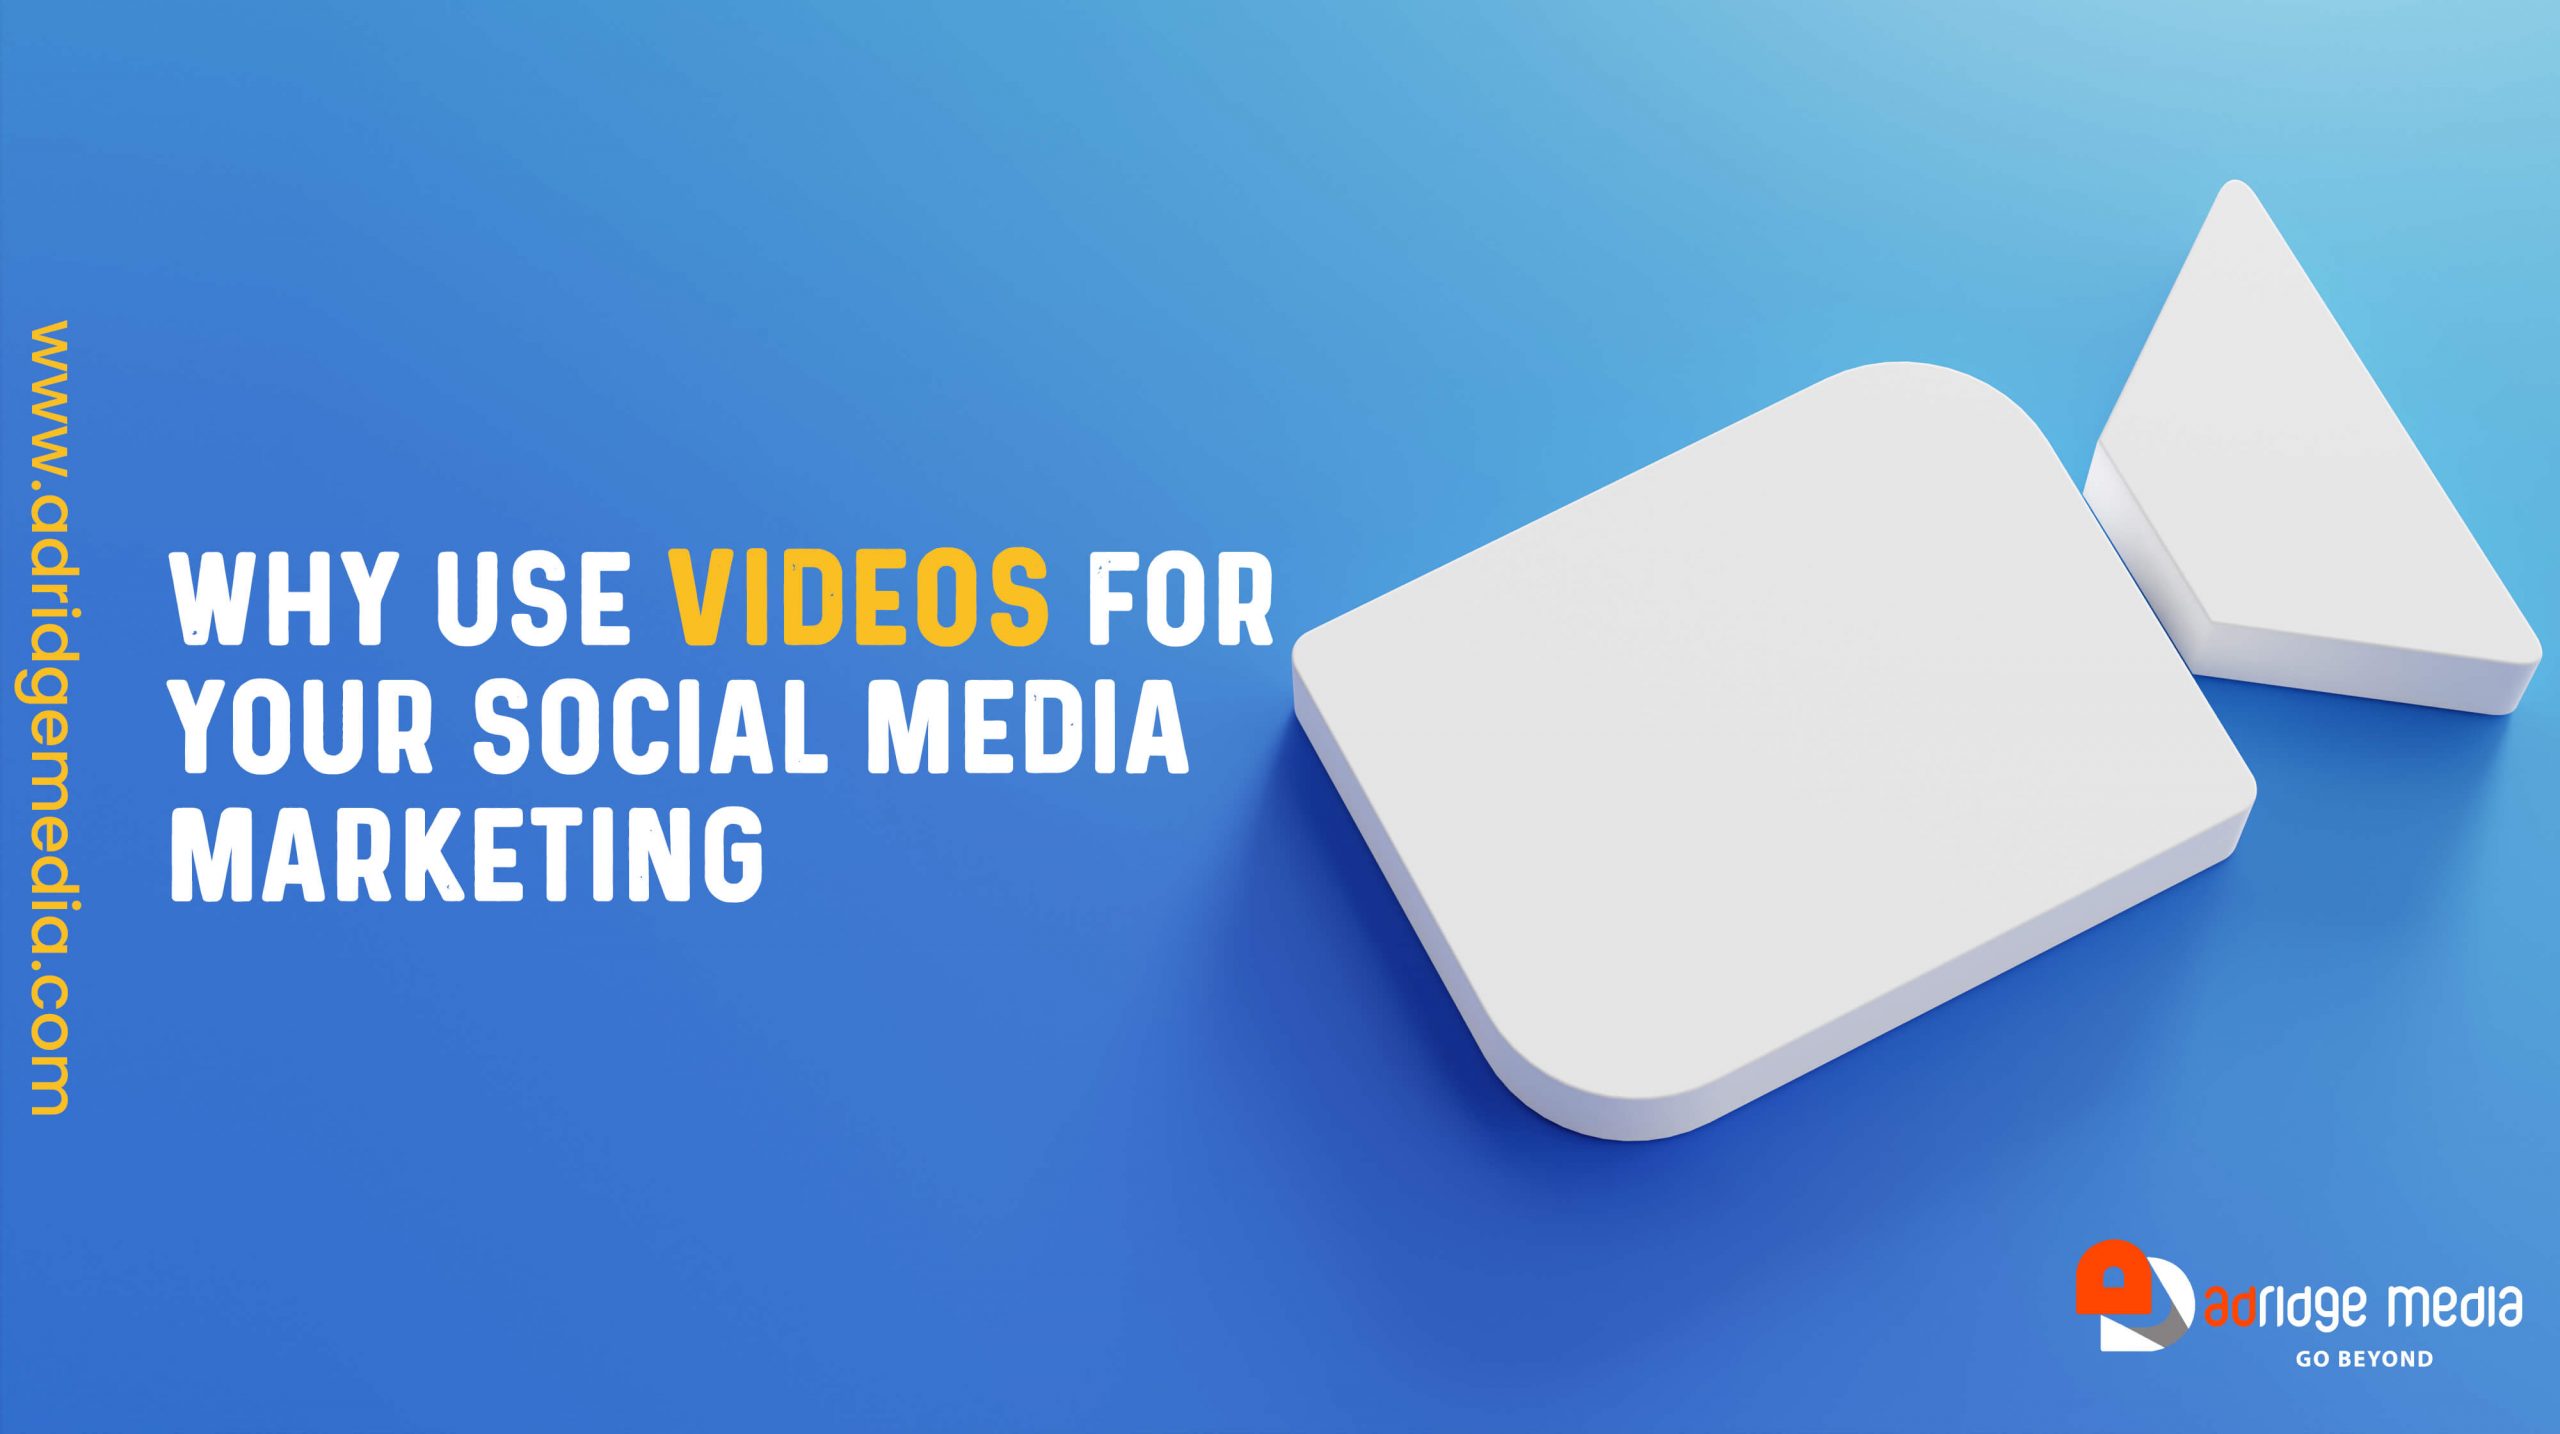 Videos for Your Social Media Marketing